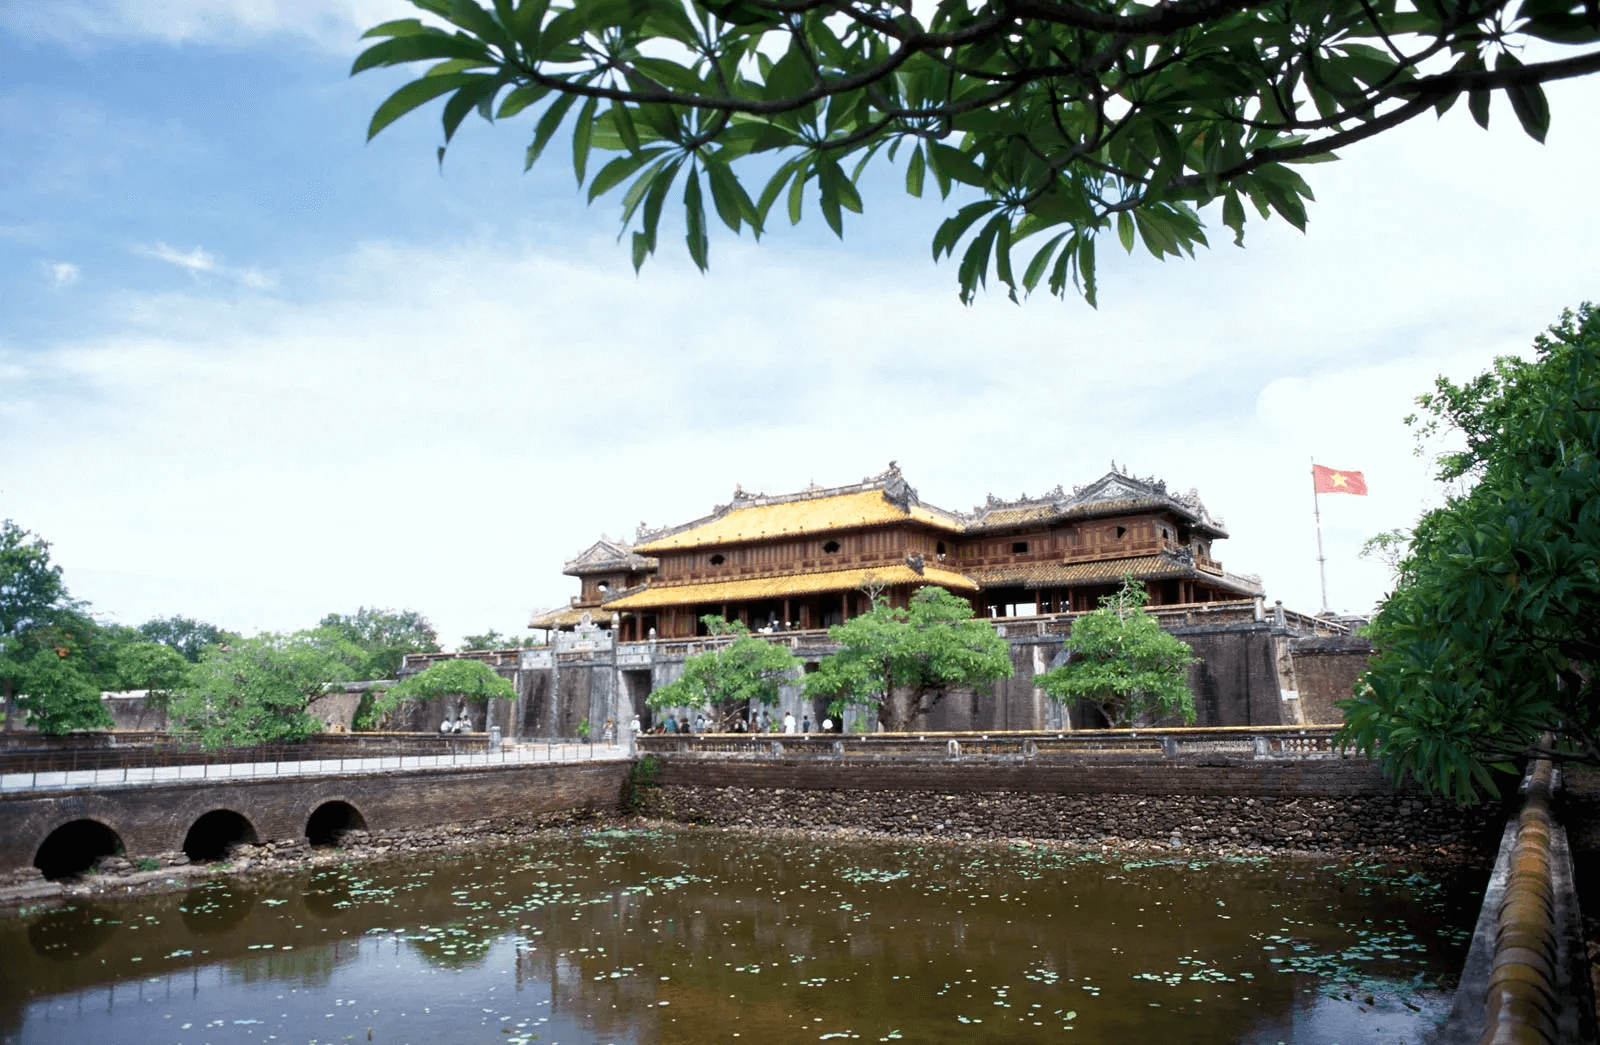 Hue Vietnam attractions - The Imperial Enclosure